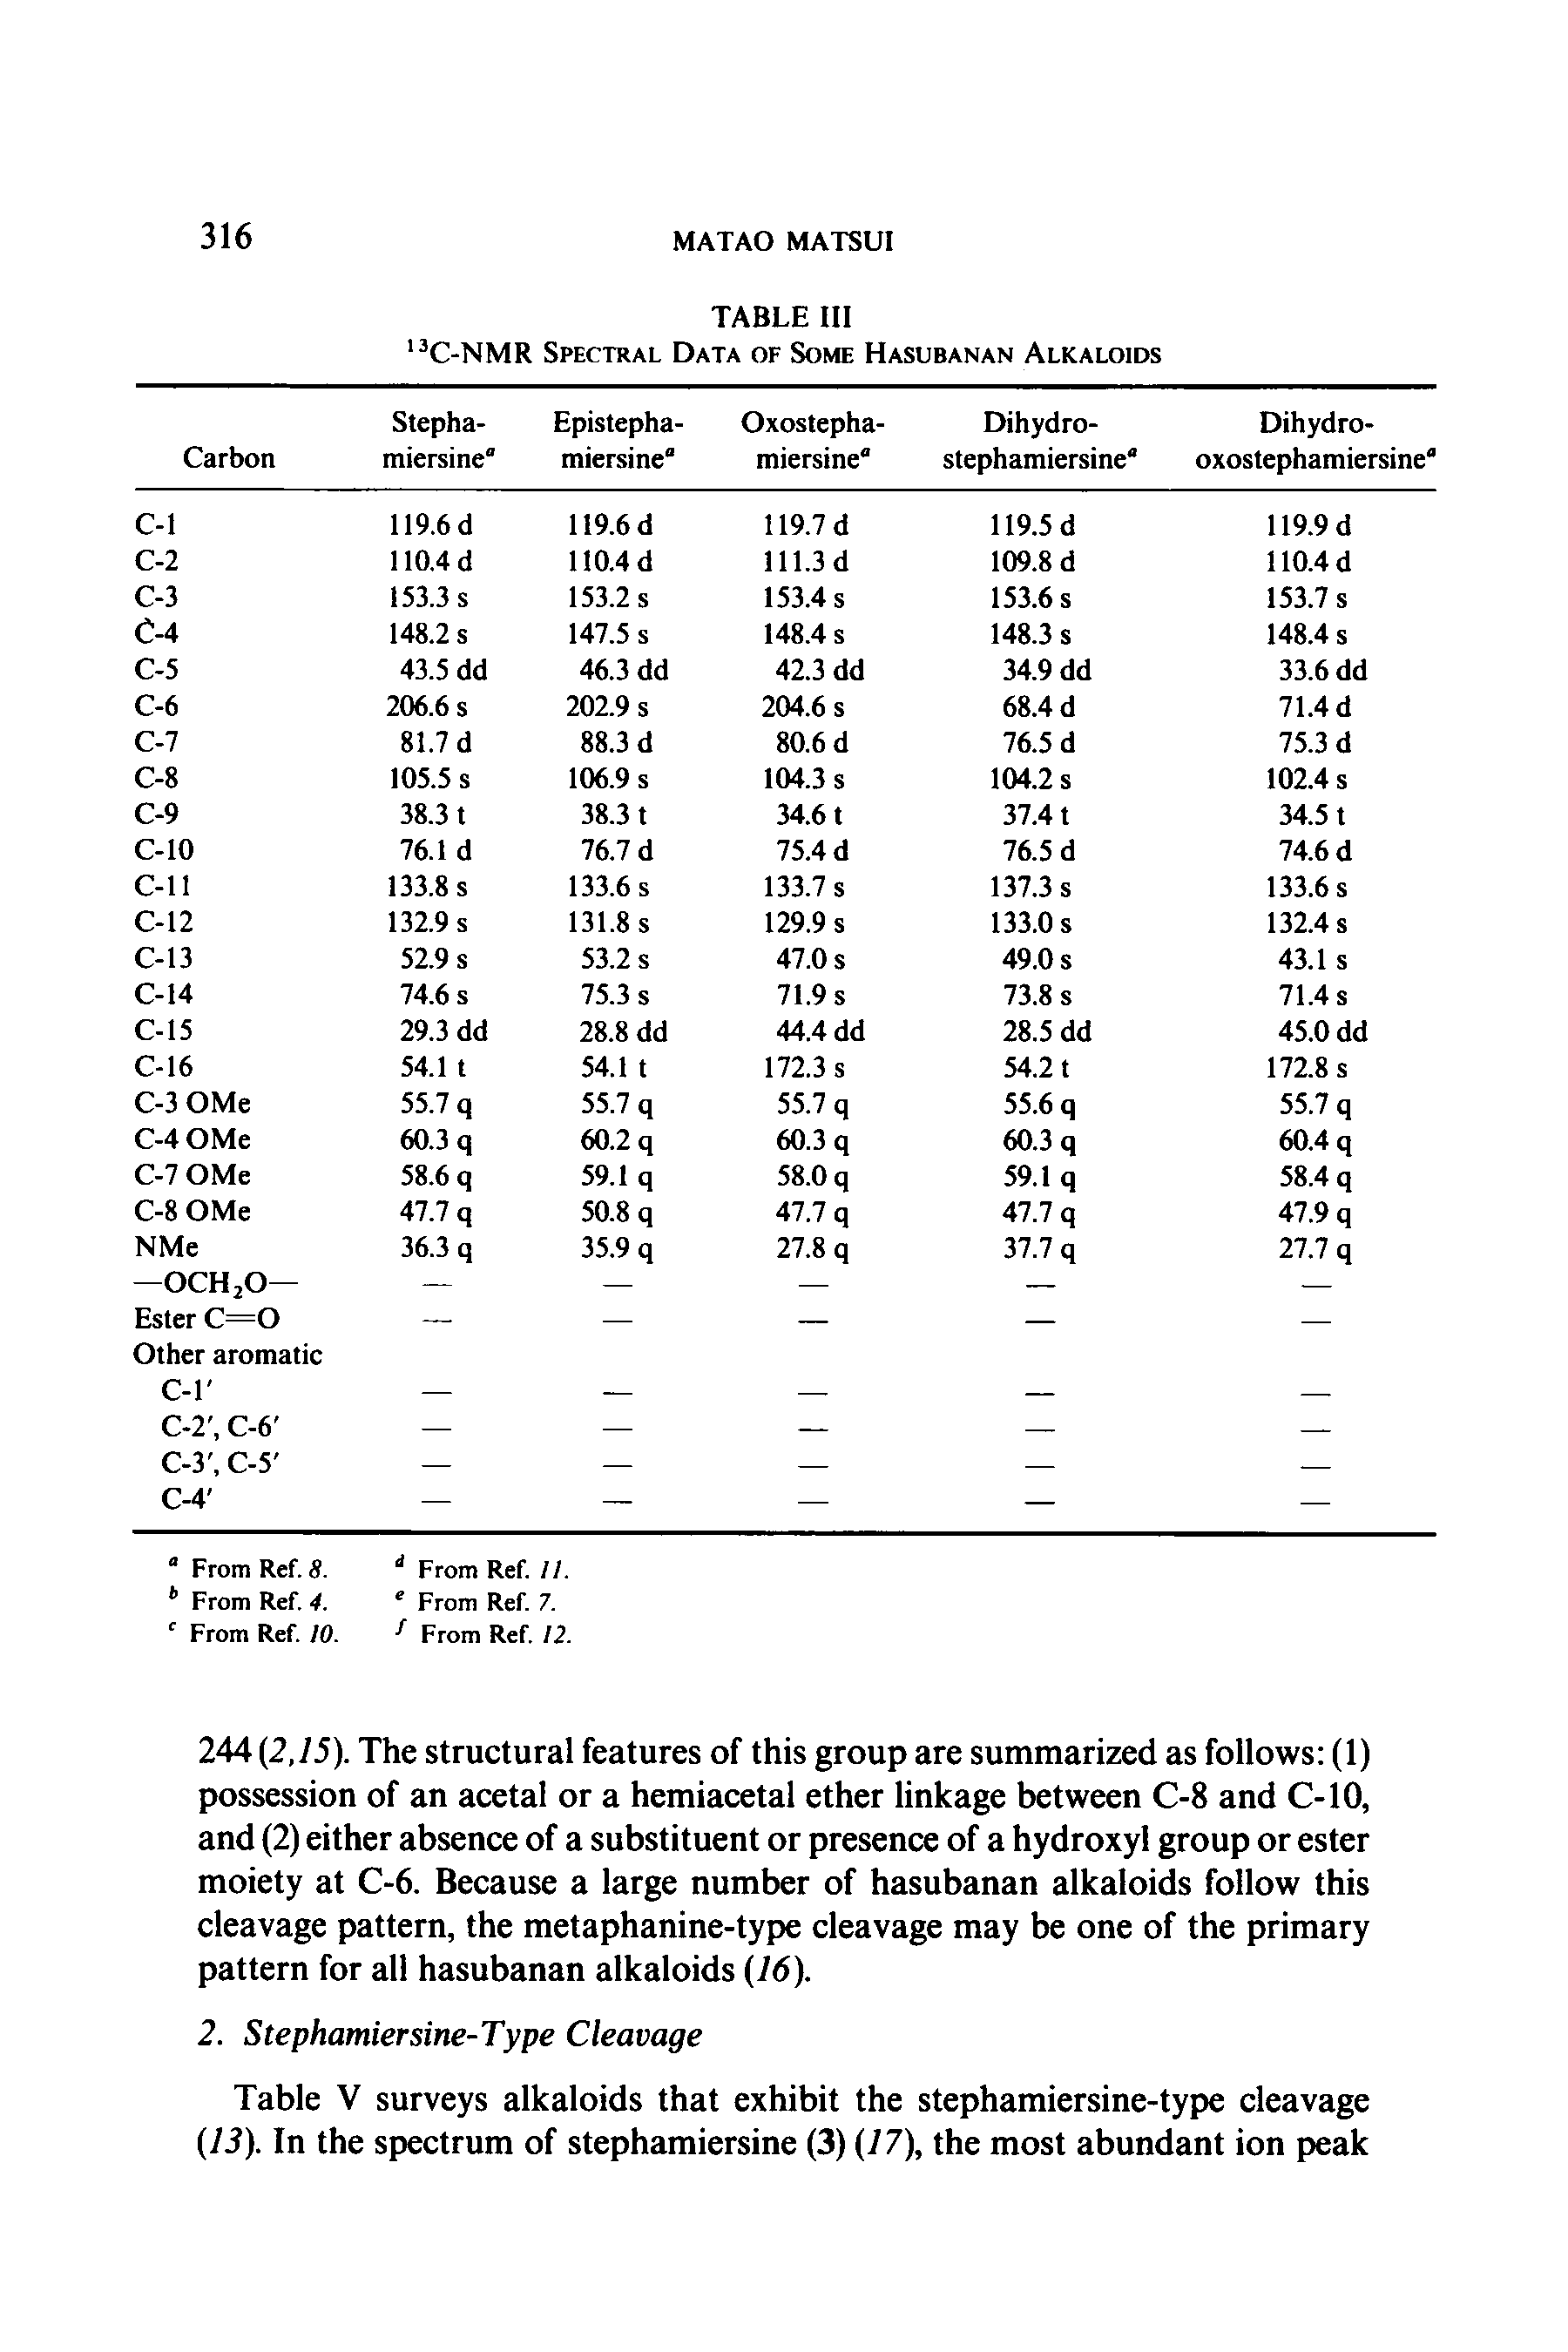 Table V surveys alkaloids that exhibit the stephamiersine-type cleavage (75). In the spectrum of stephamiersine (3) (77), the most abundant ion peak...